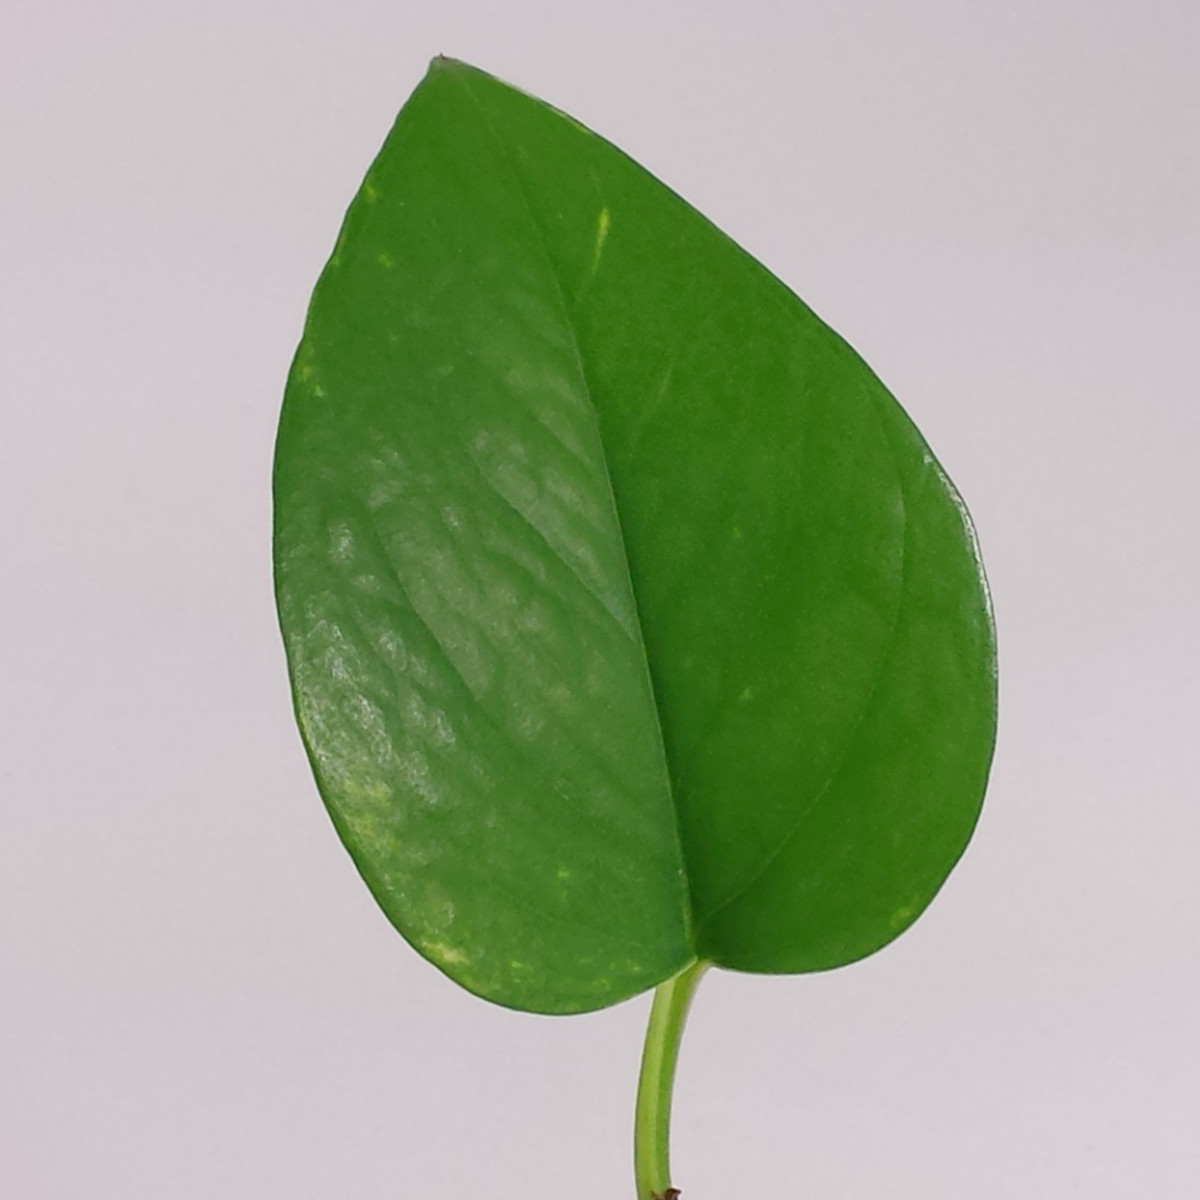 Pothos plant leaf